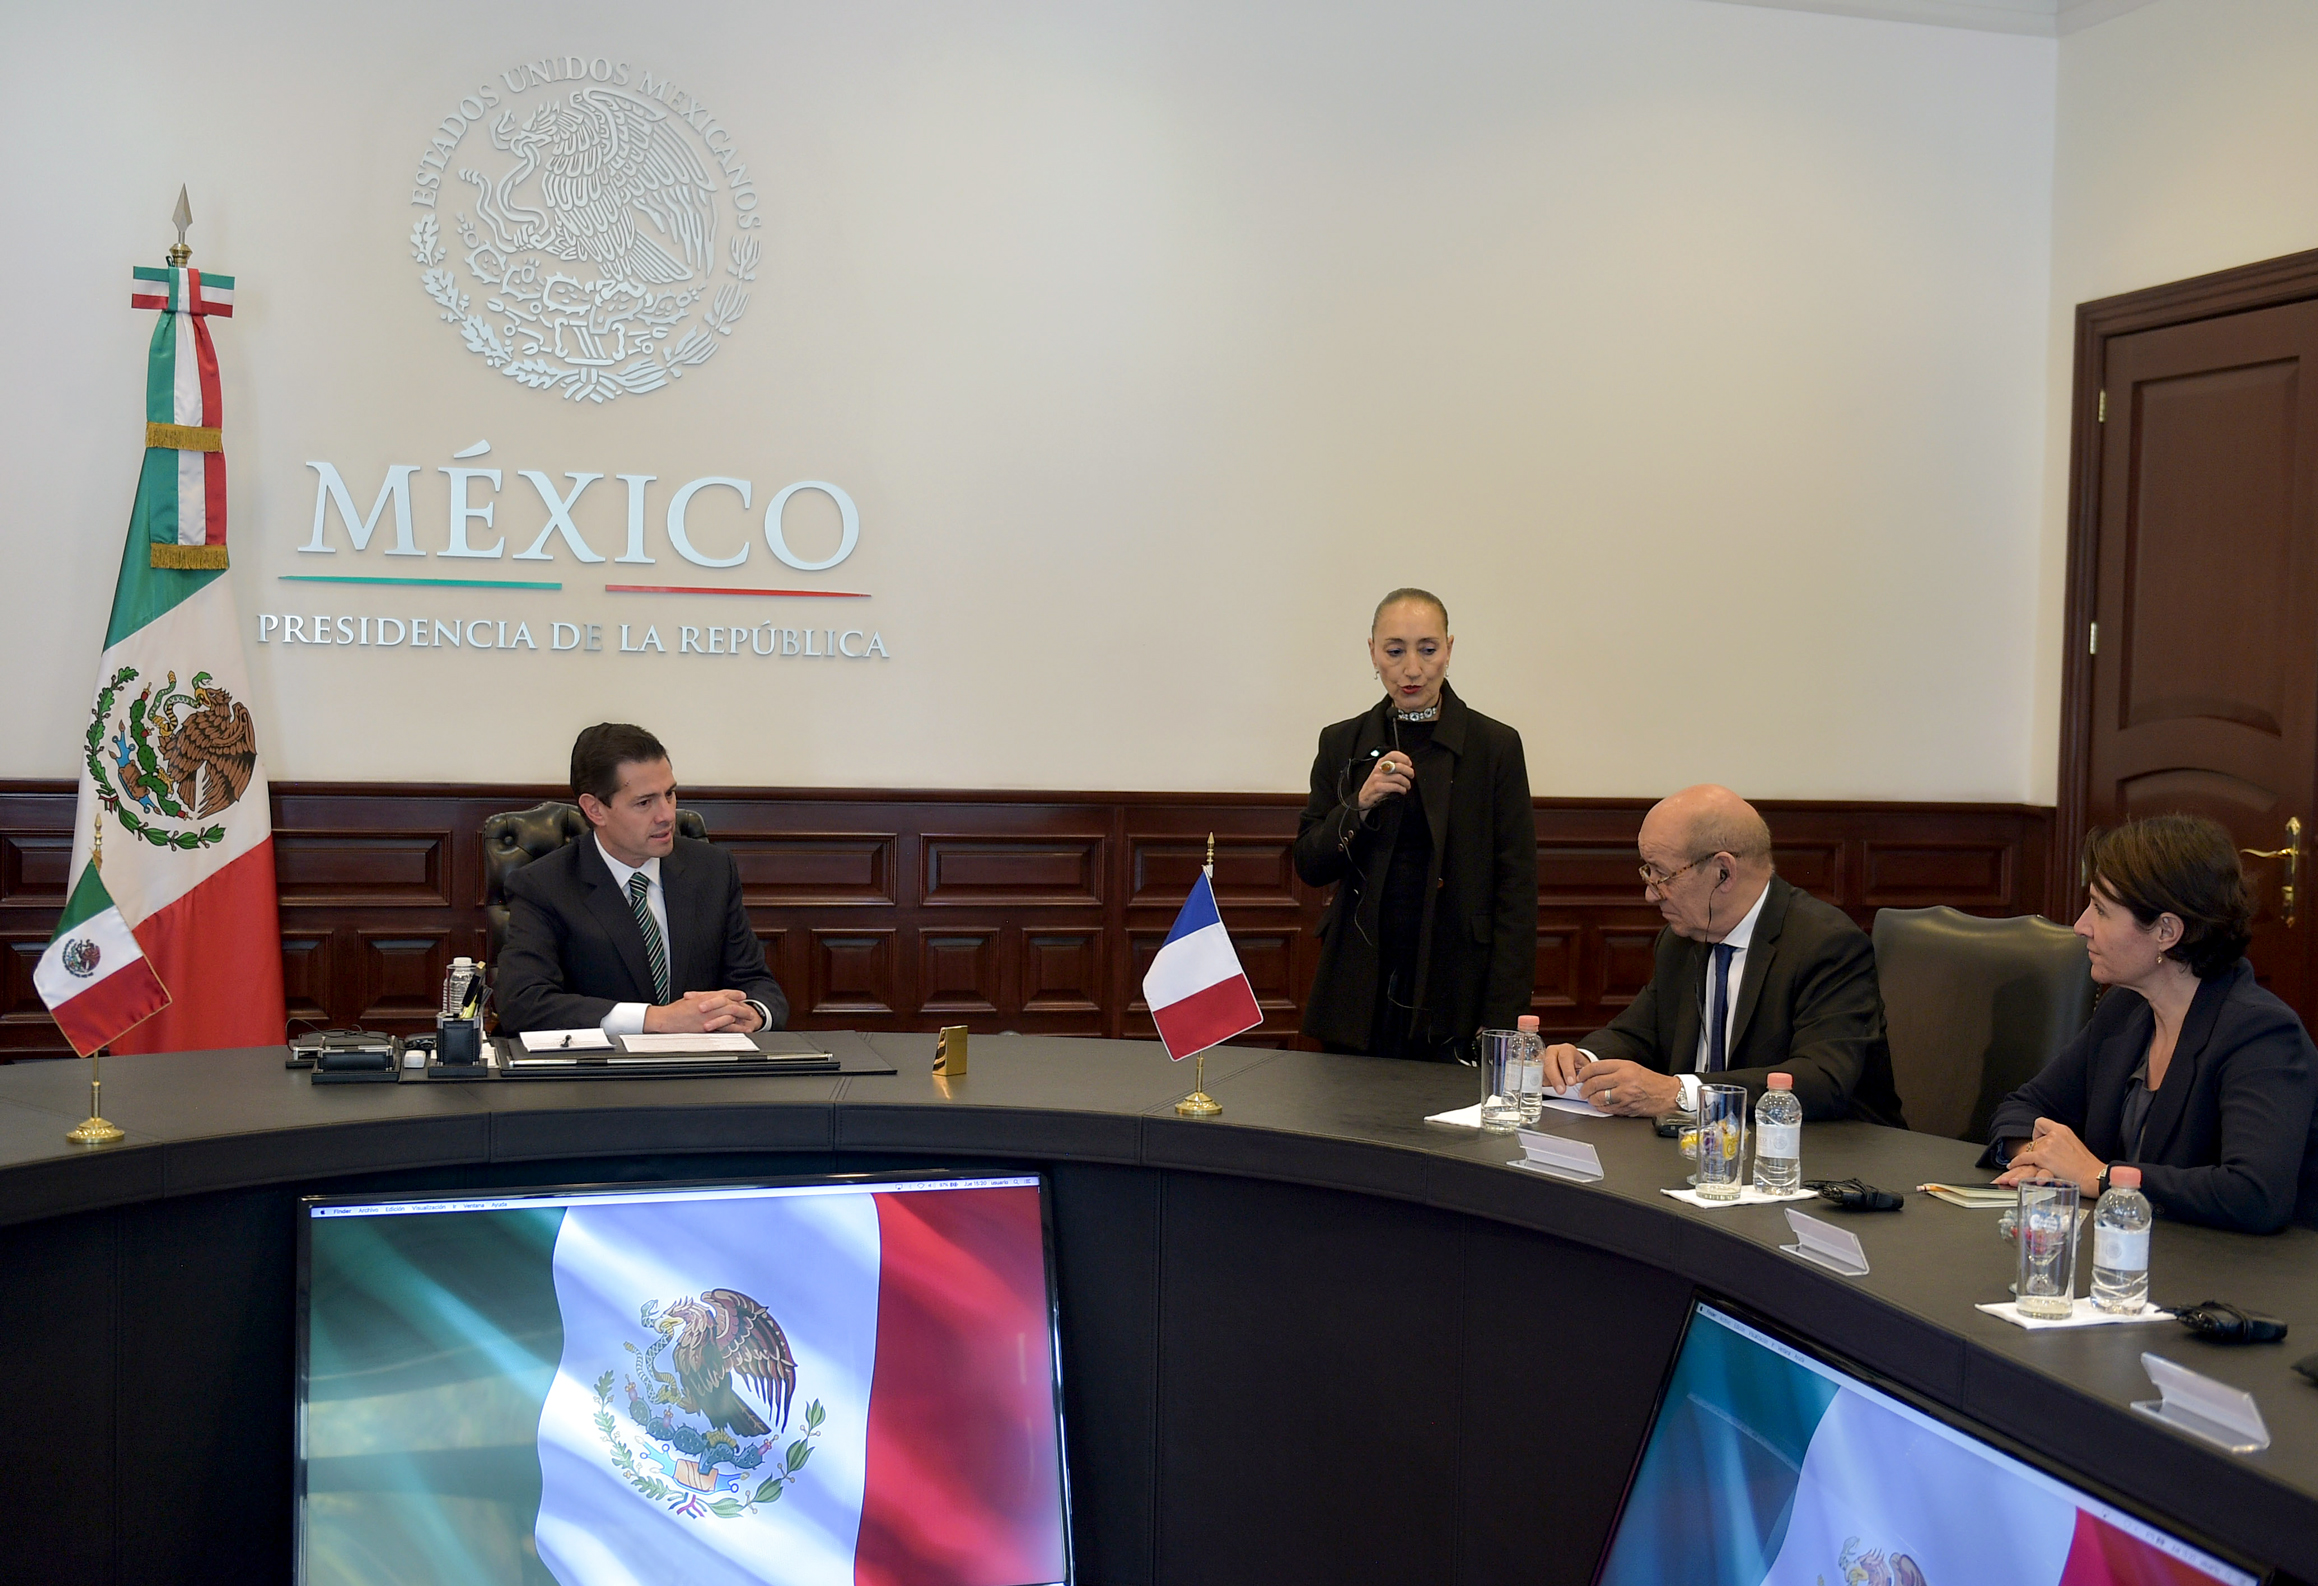  Asegura Peña Nieto que relación México-Francia vive uno de sus mejores momentos